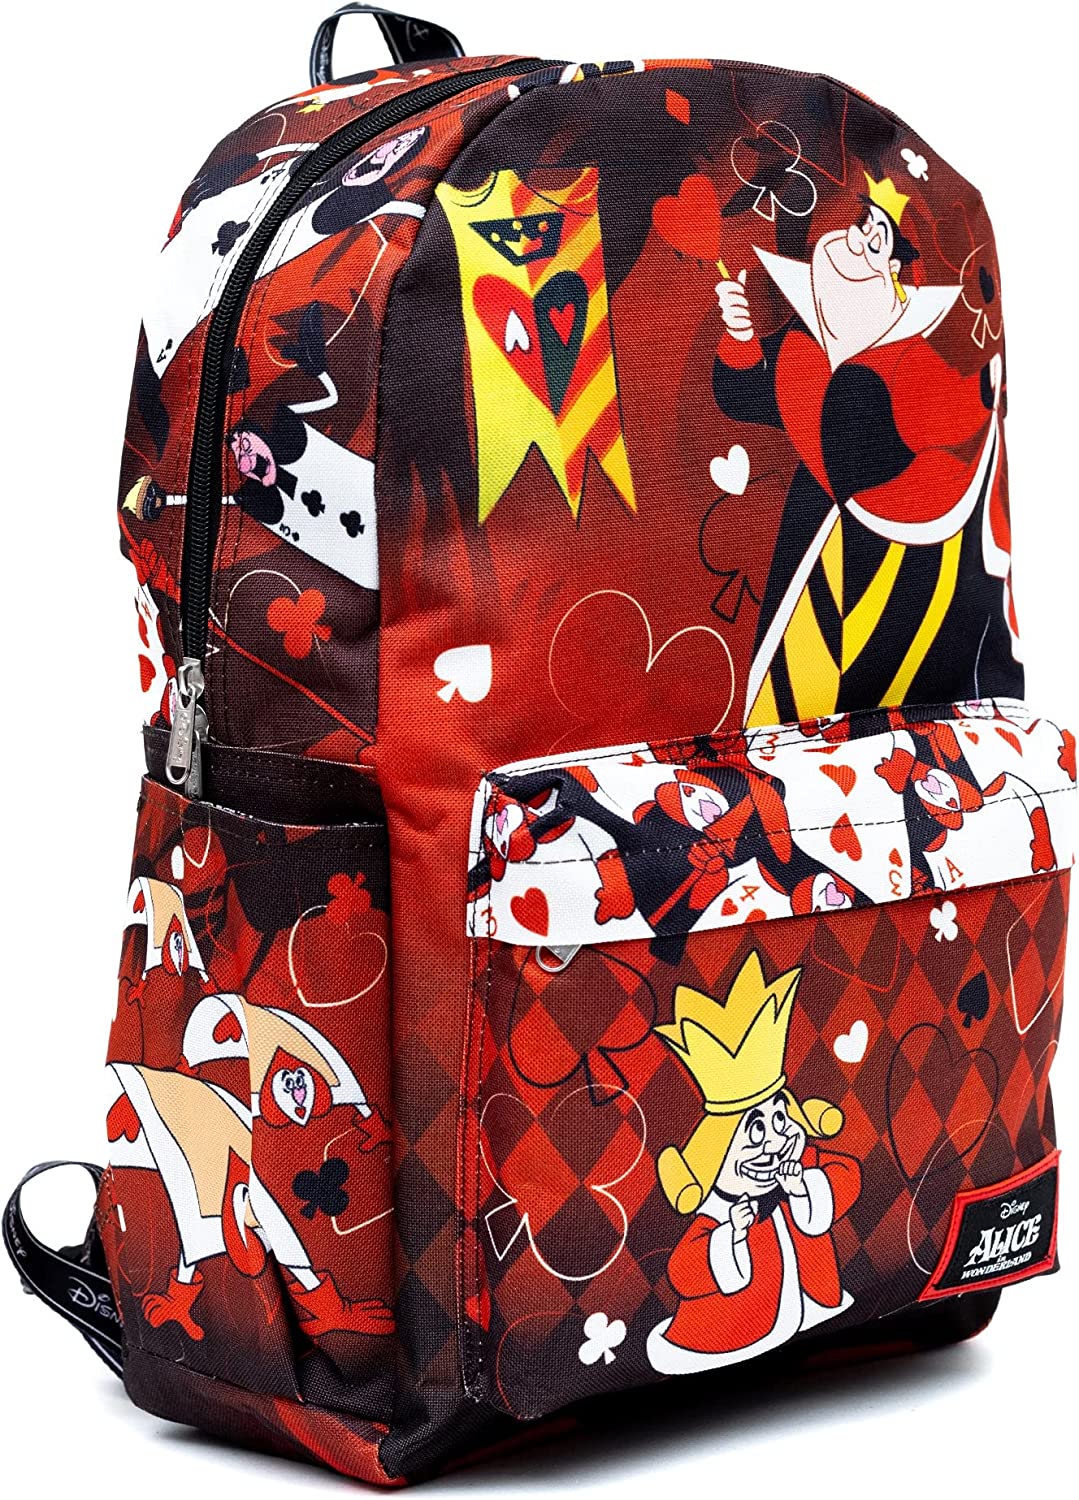 Disney - Alice in Wonderland - Queen of Hearts - 17" Full Size Nylon Backpack - Wondapop